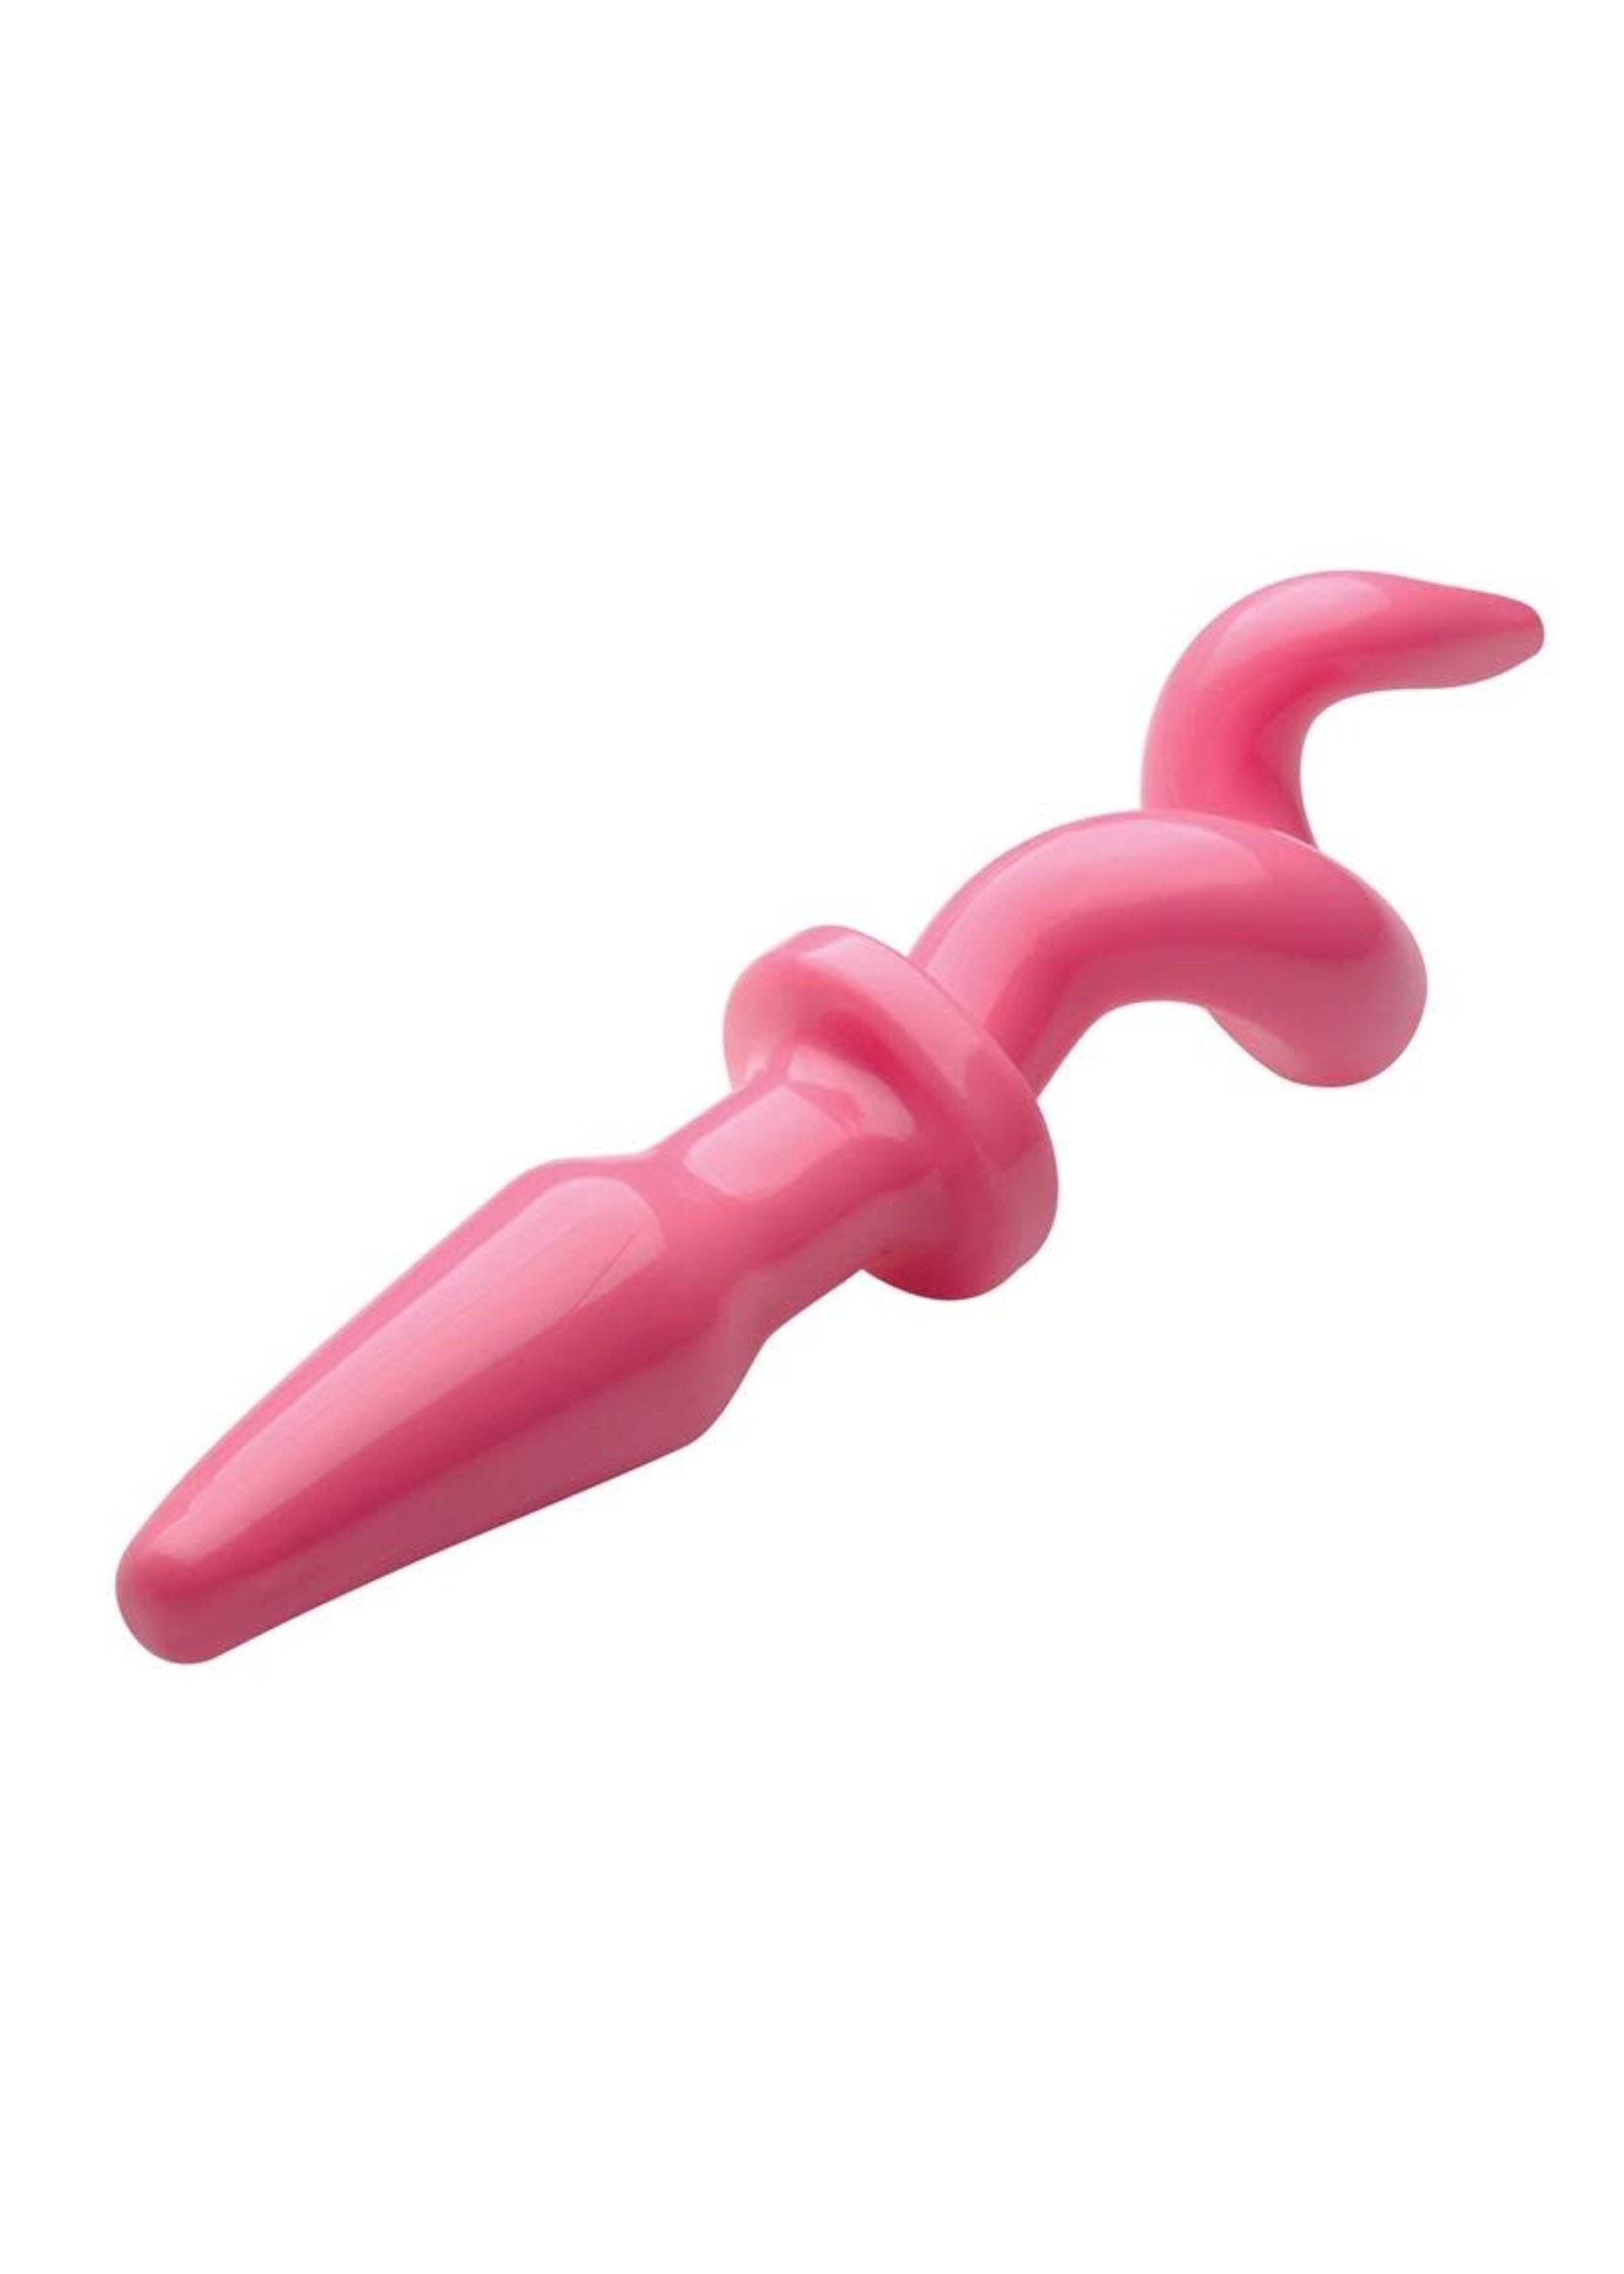 XR Brands Tailz Piggy Tail Anal Plug Pink 9 Inch